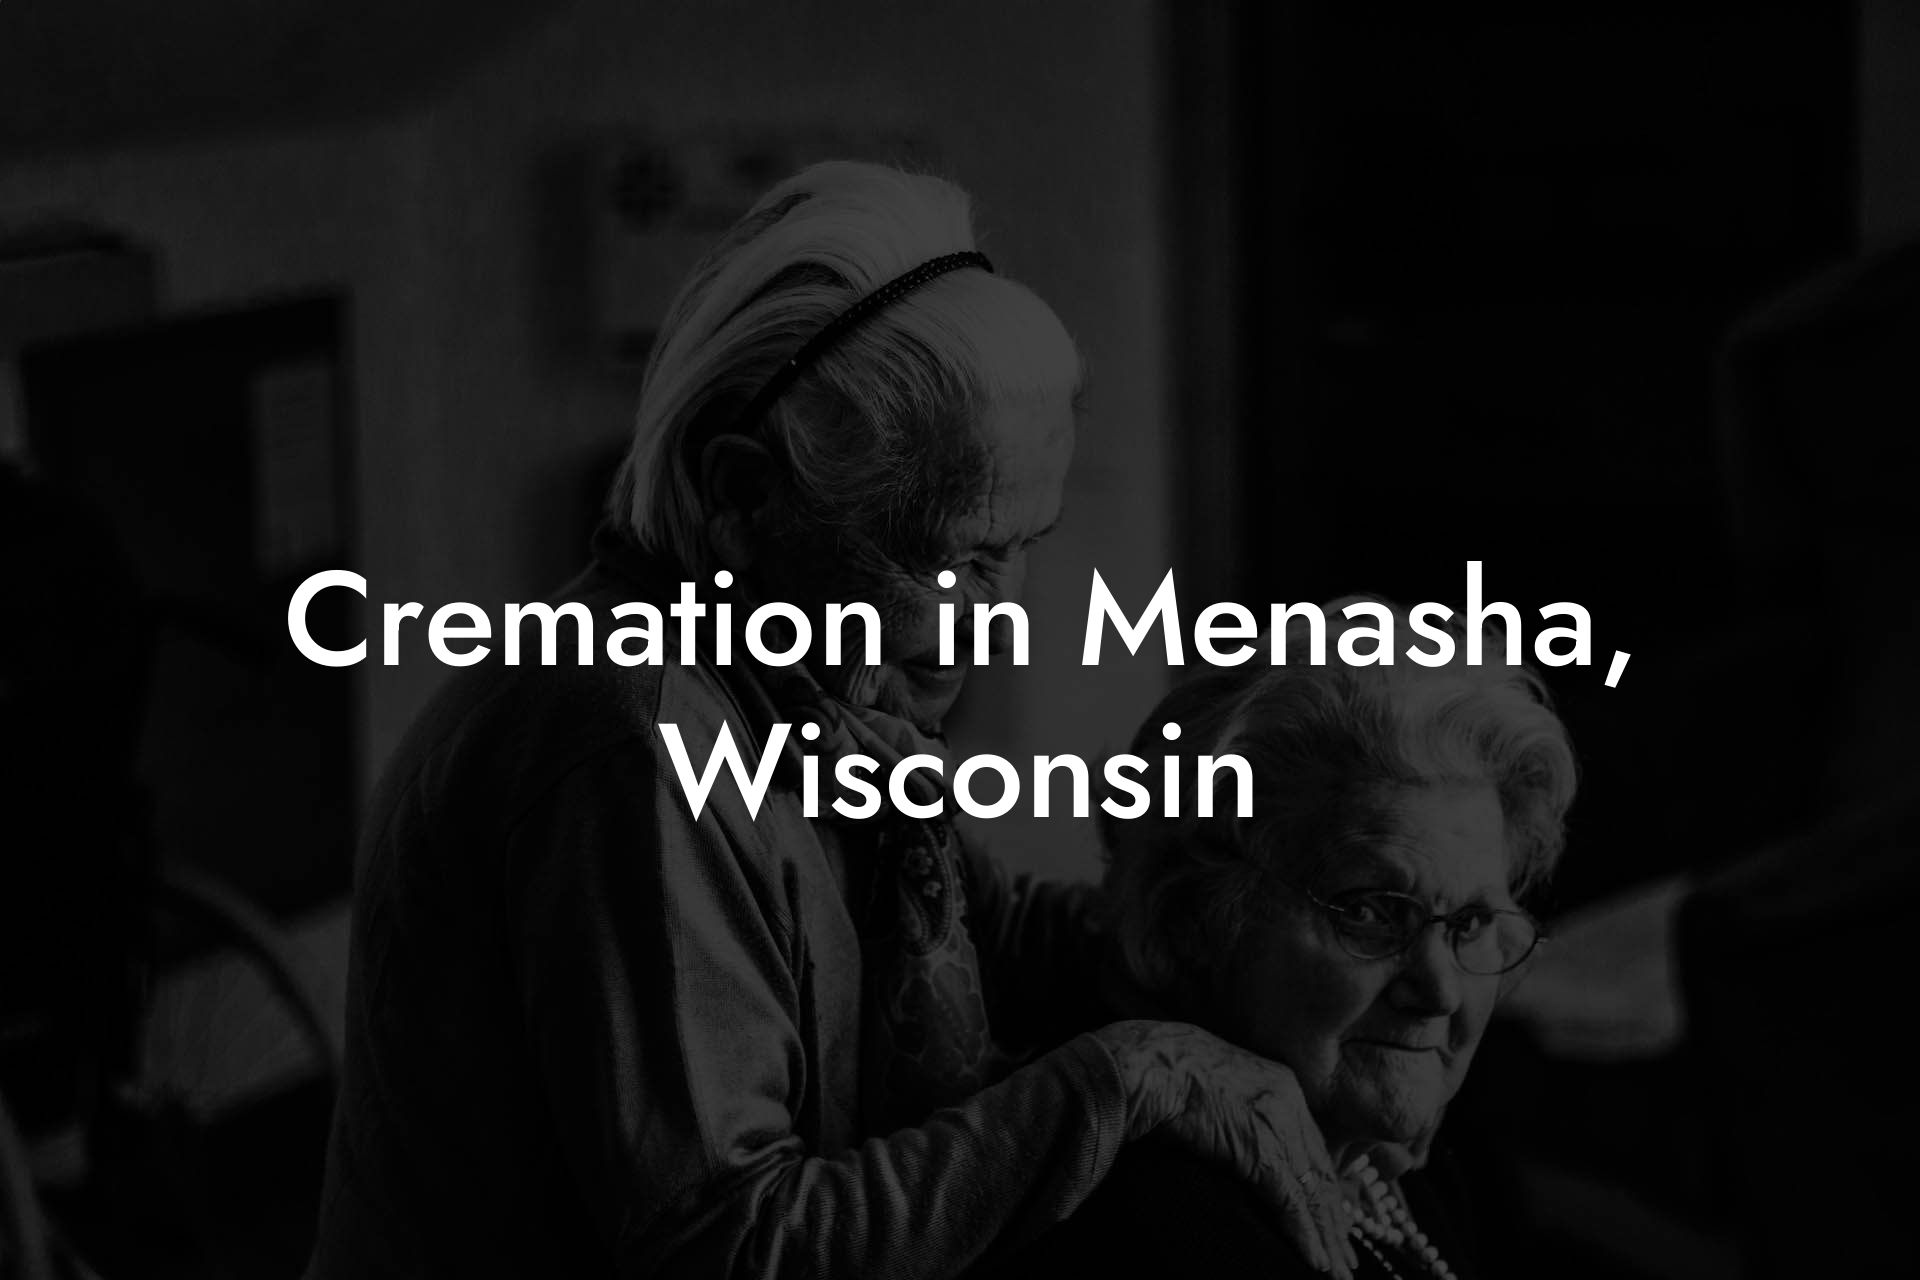 Cremation in Menasha, Wisconsin